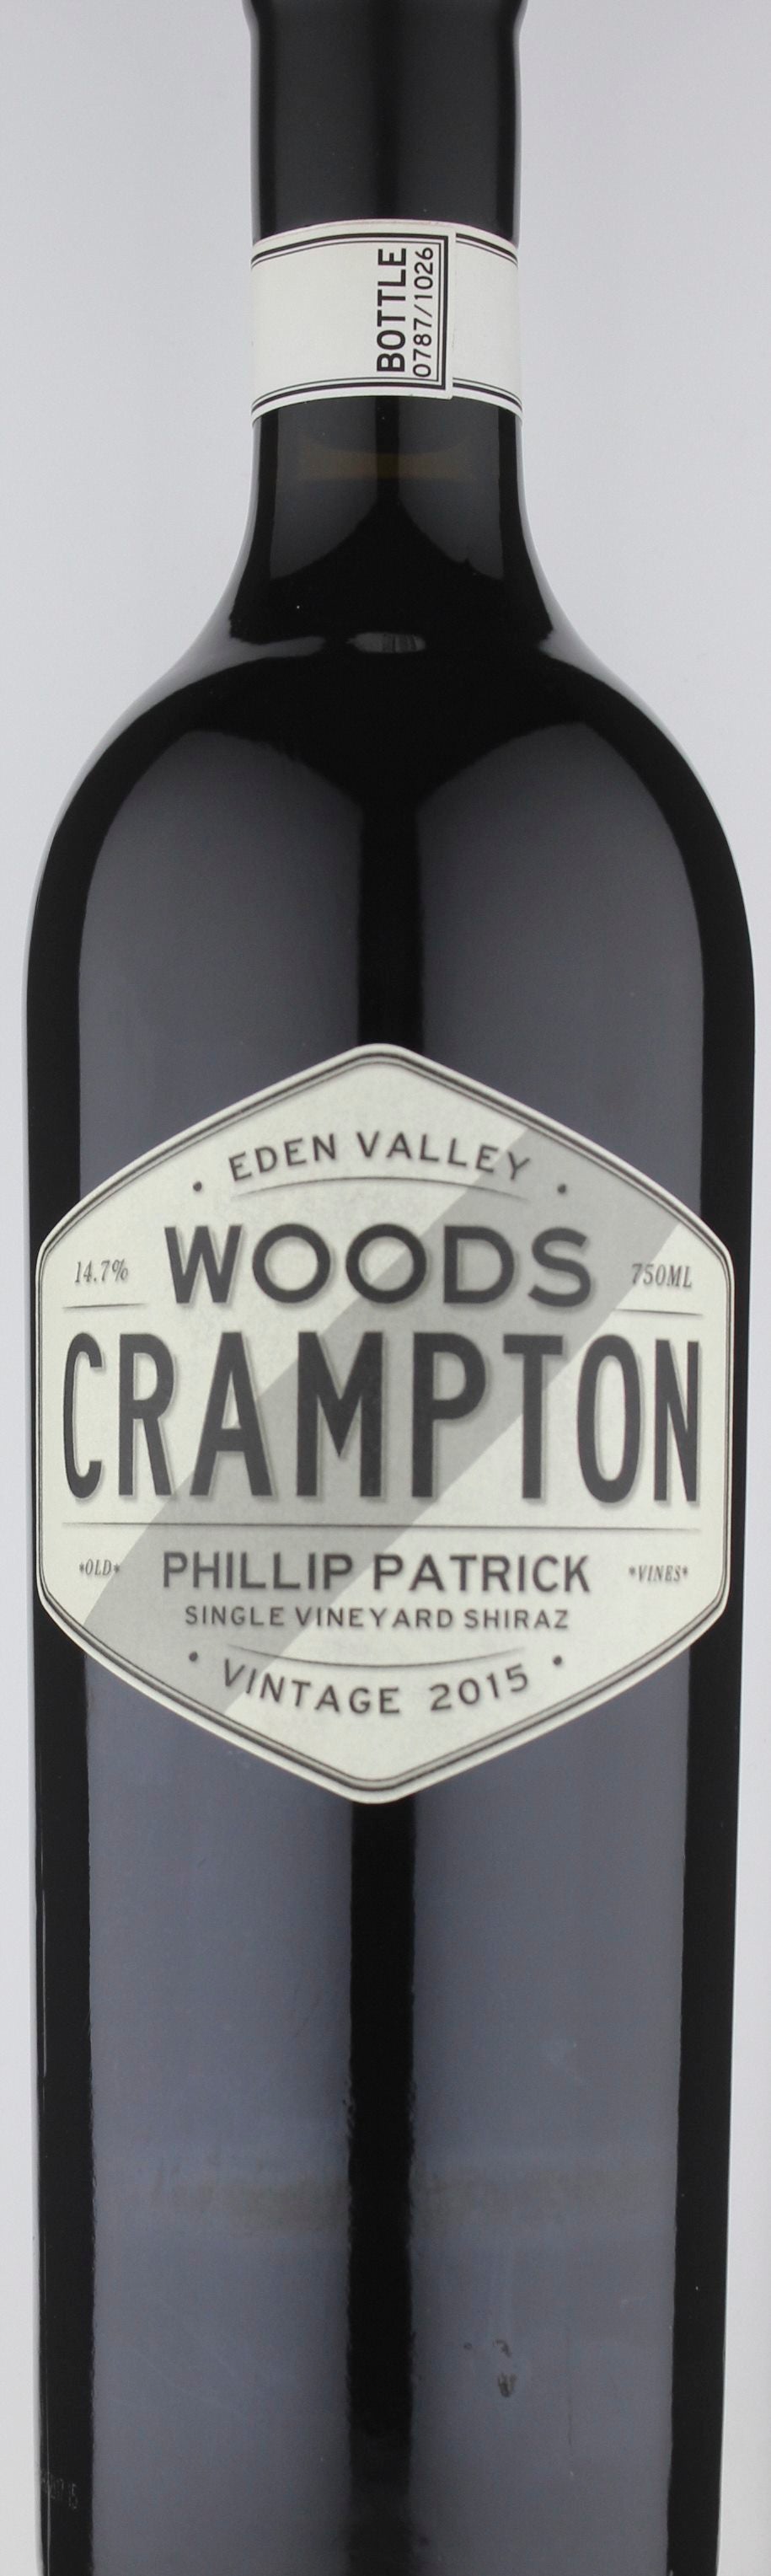 Woods Crampton Wines Phillip Patrick Single Vineyard Shiraz 2015